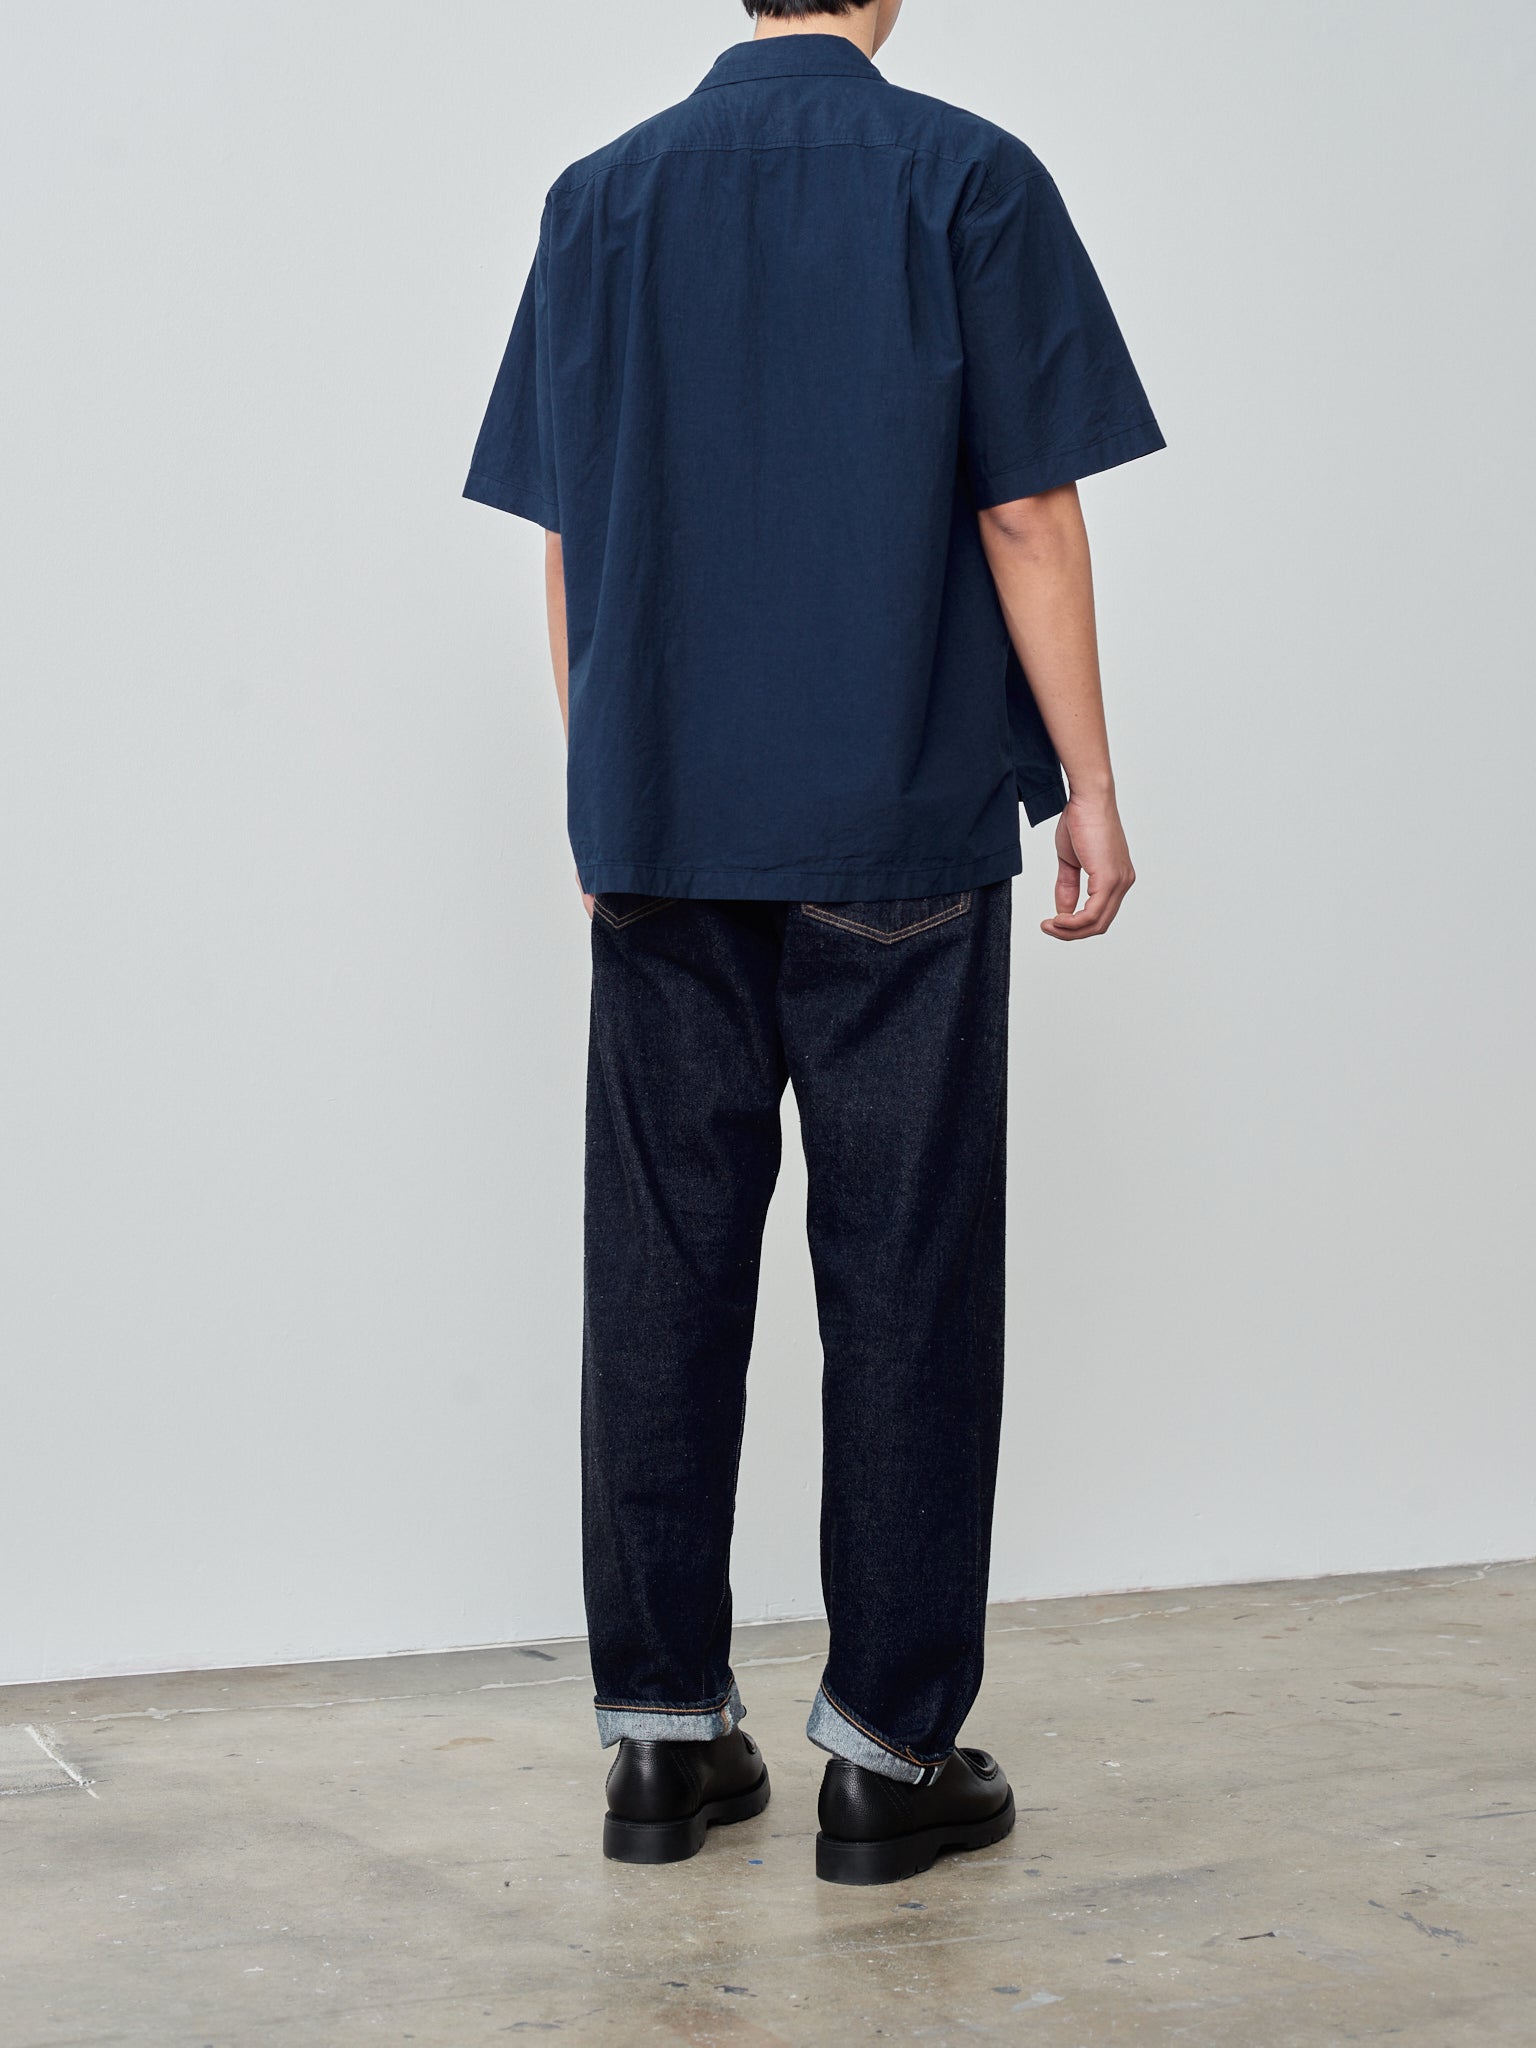 Namu Shop - Yoko Sakamoto Open Collar Shirt - Navy